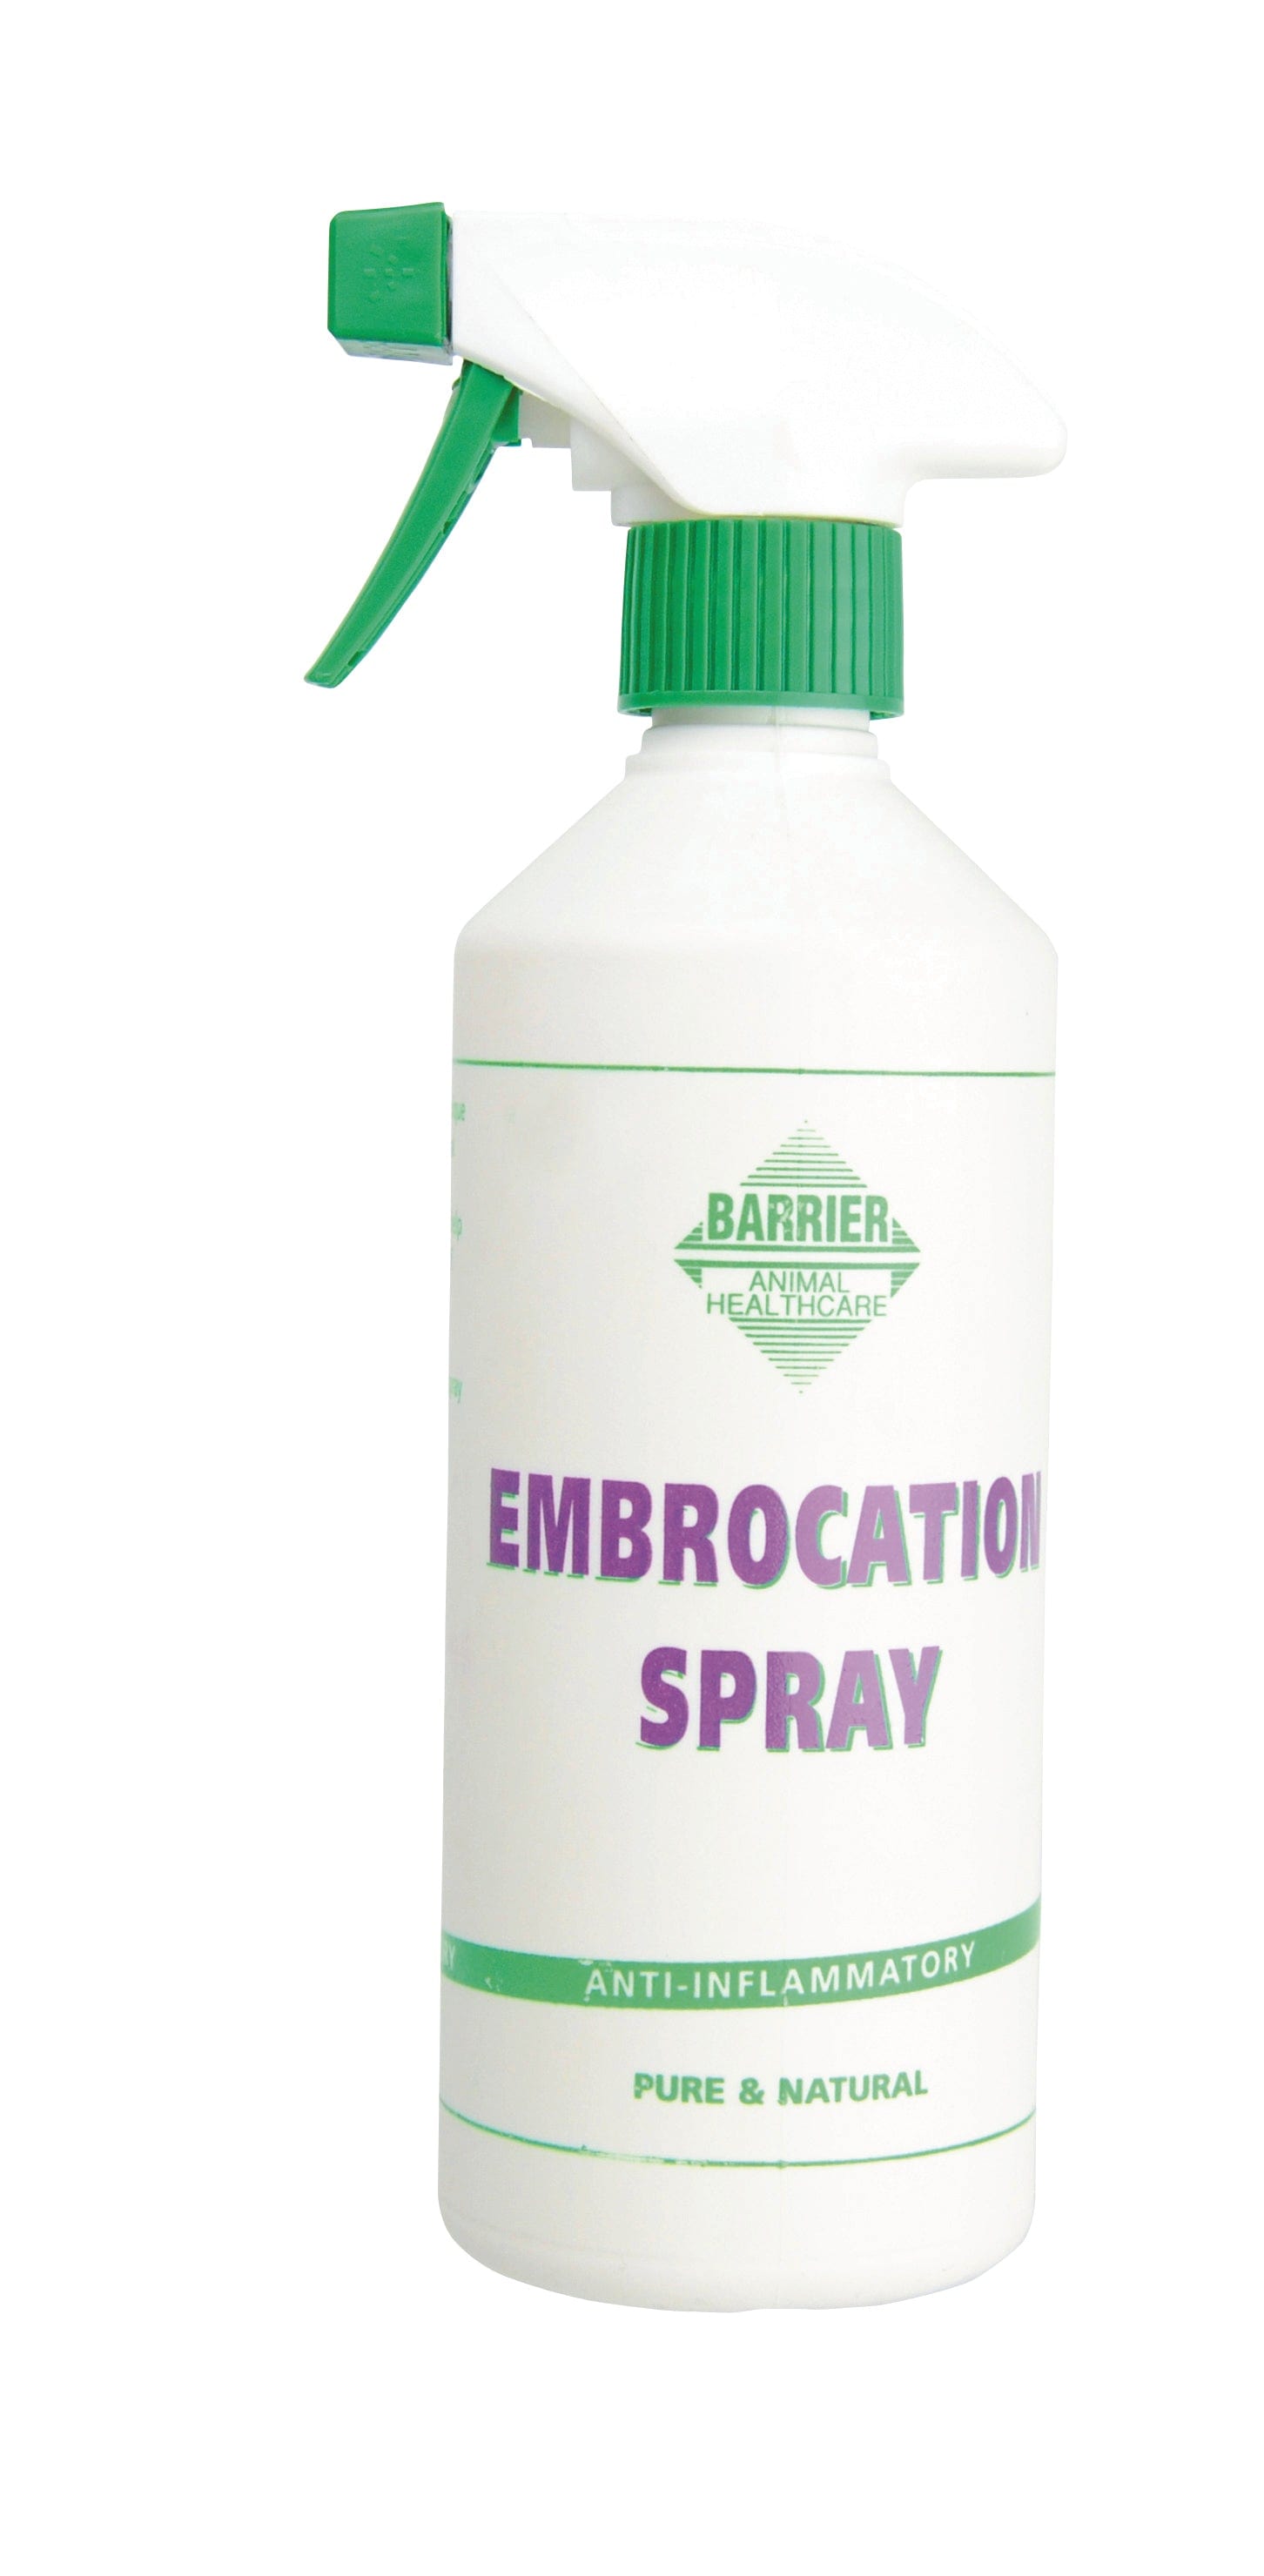 Barrier embrocation spray